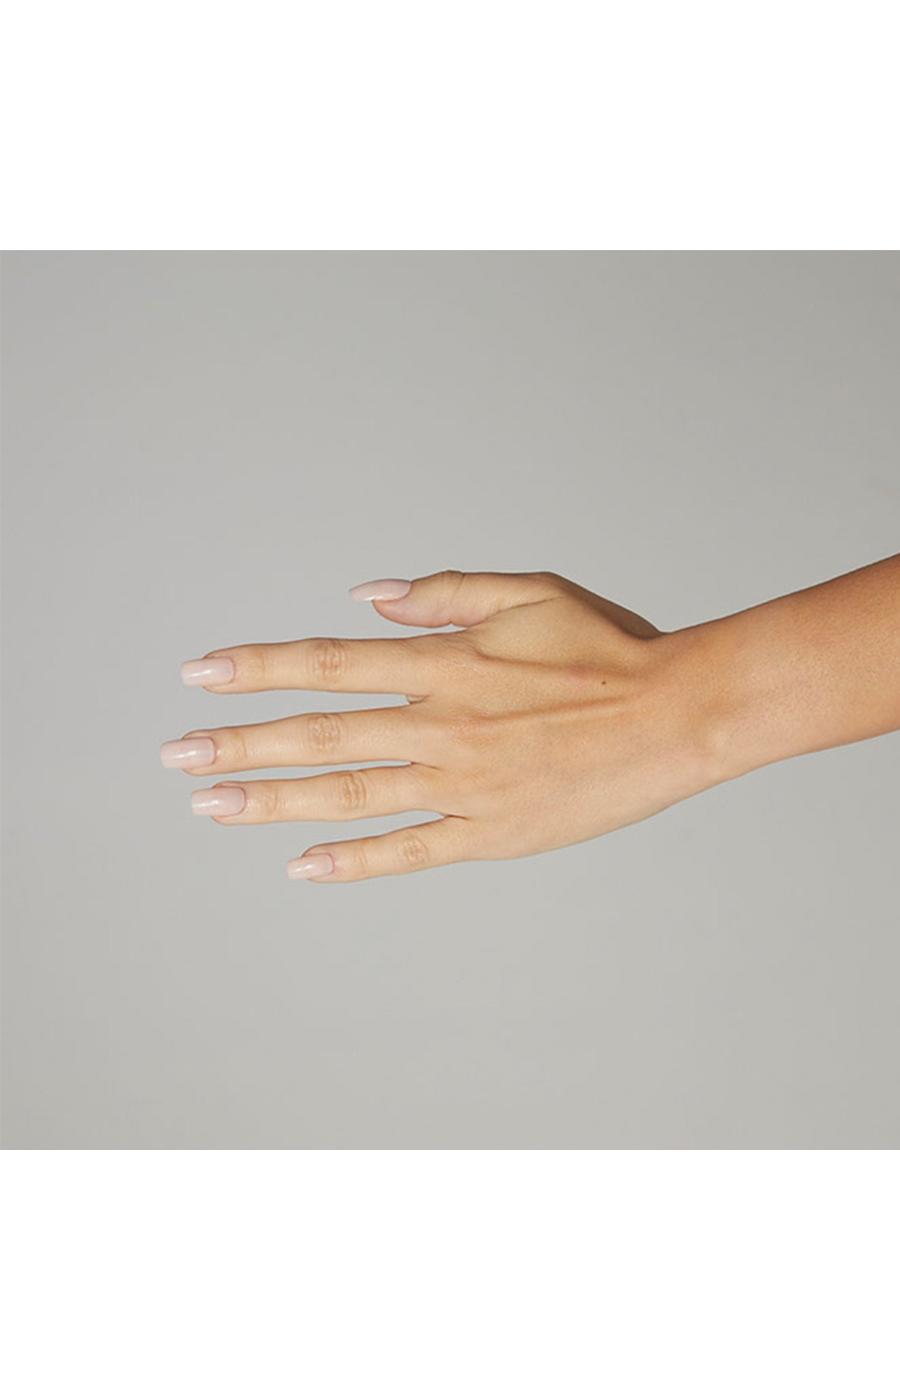 Diosa Fauna's Blush Artificial Nails - Pink; image 3 of 4